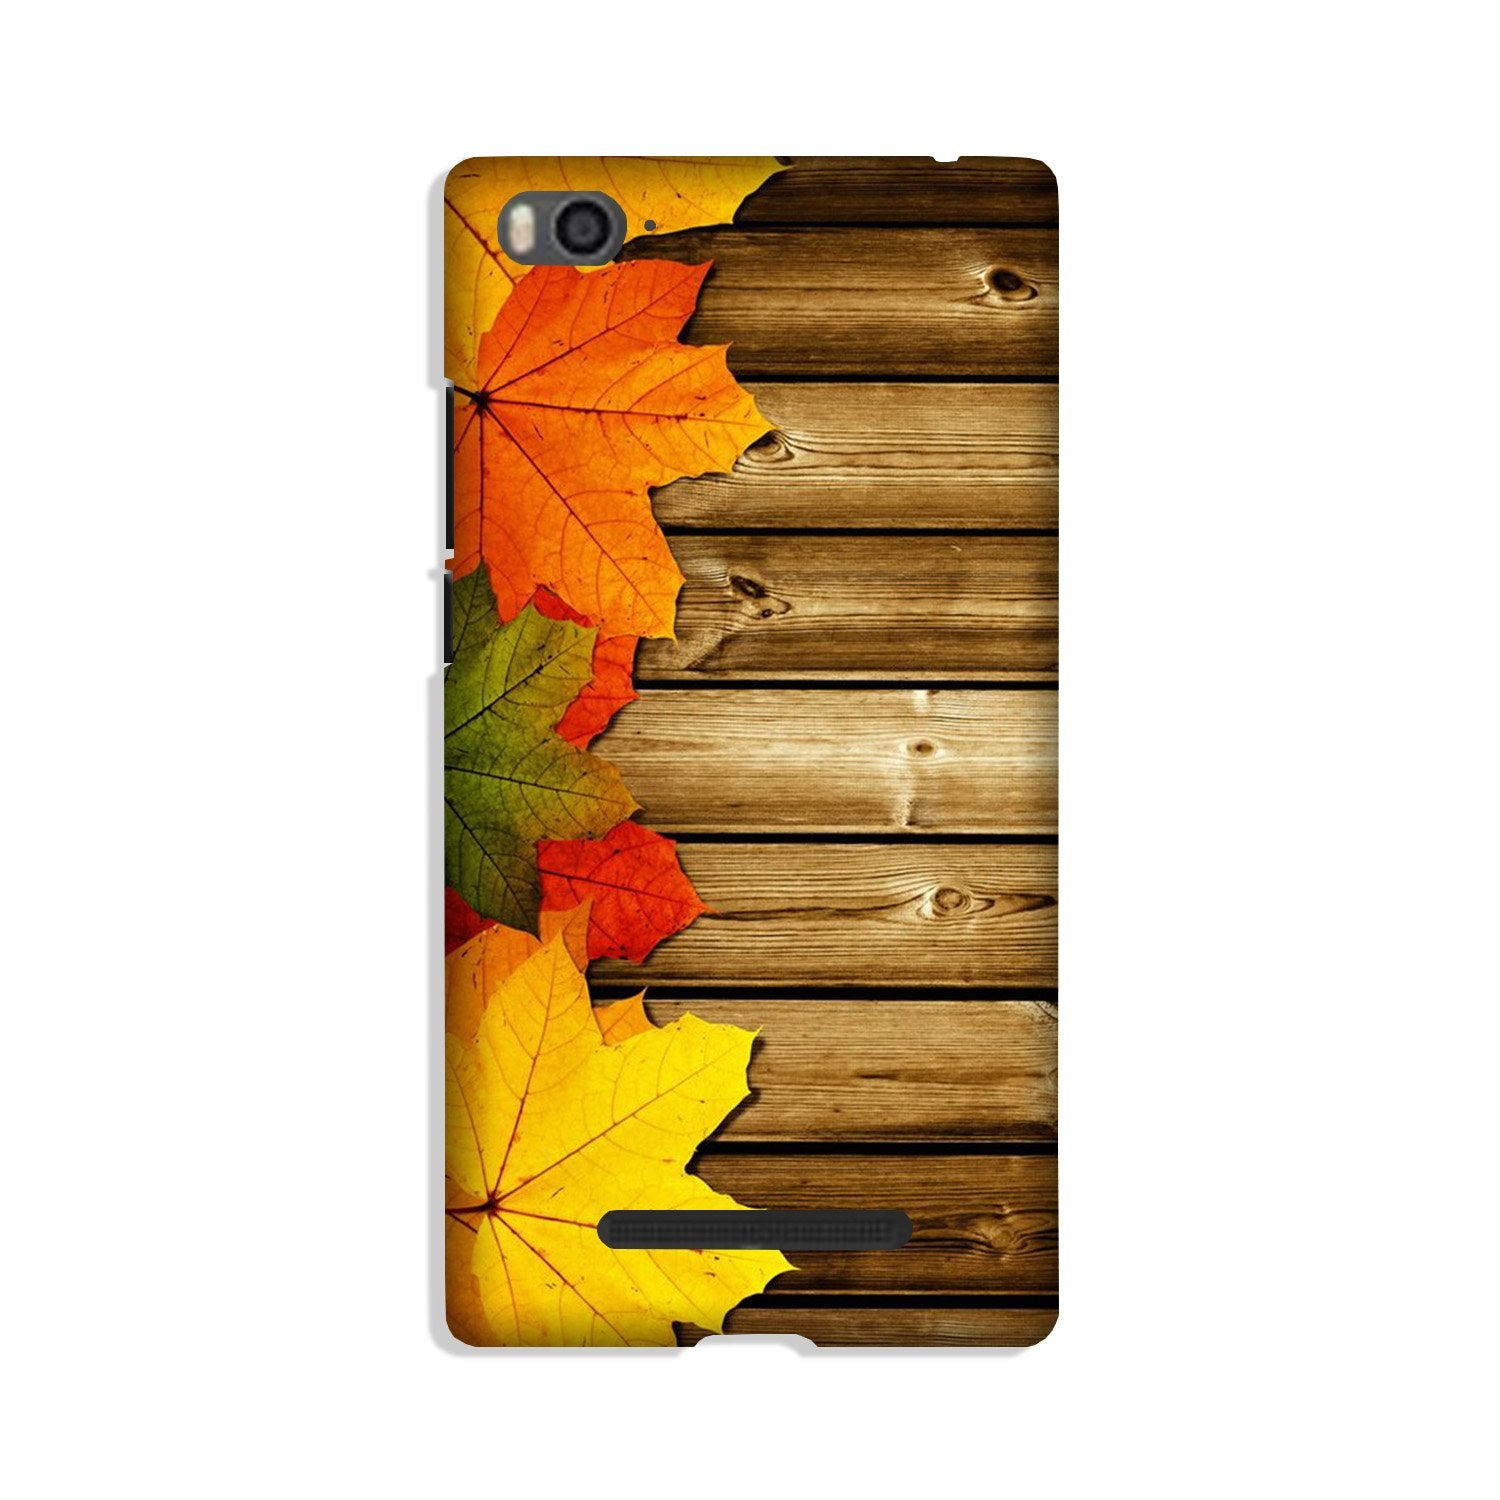 Wooden look3 Case for Xiaomi Redmi 5A